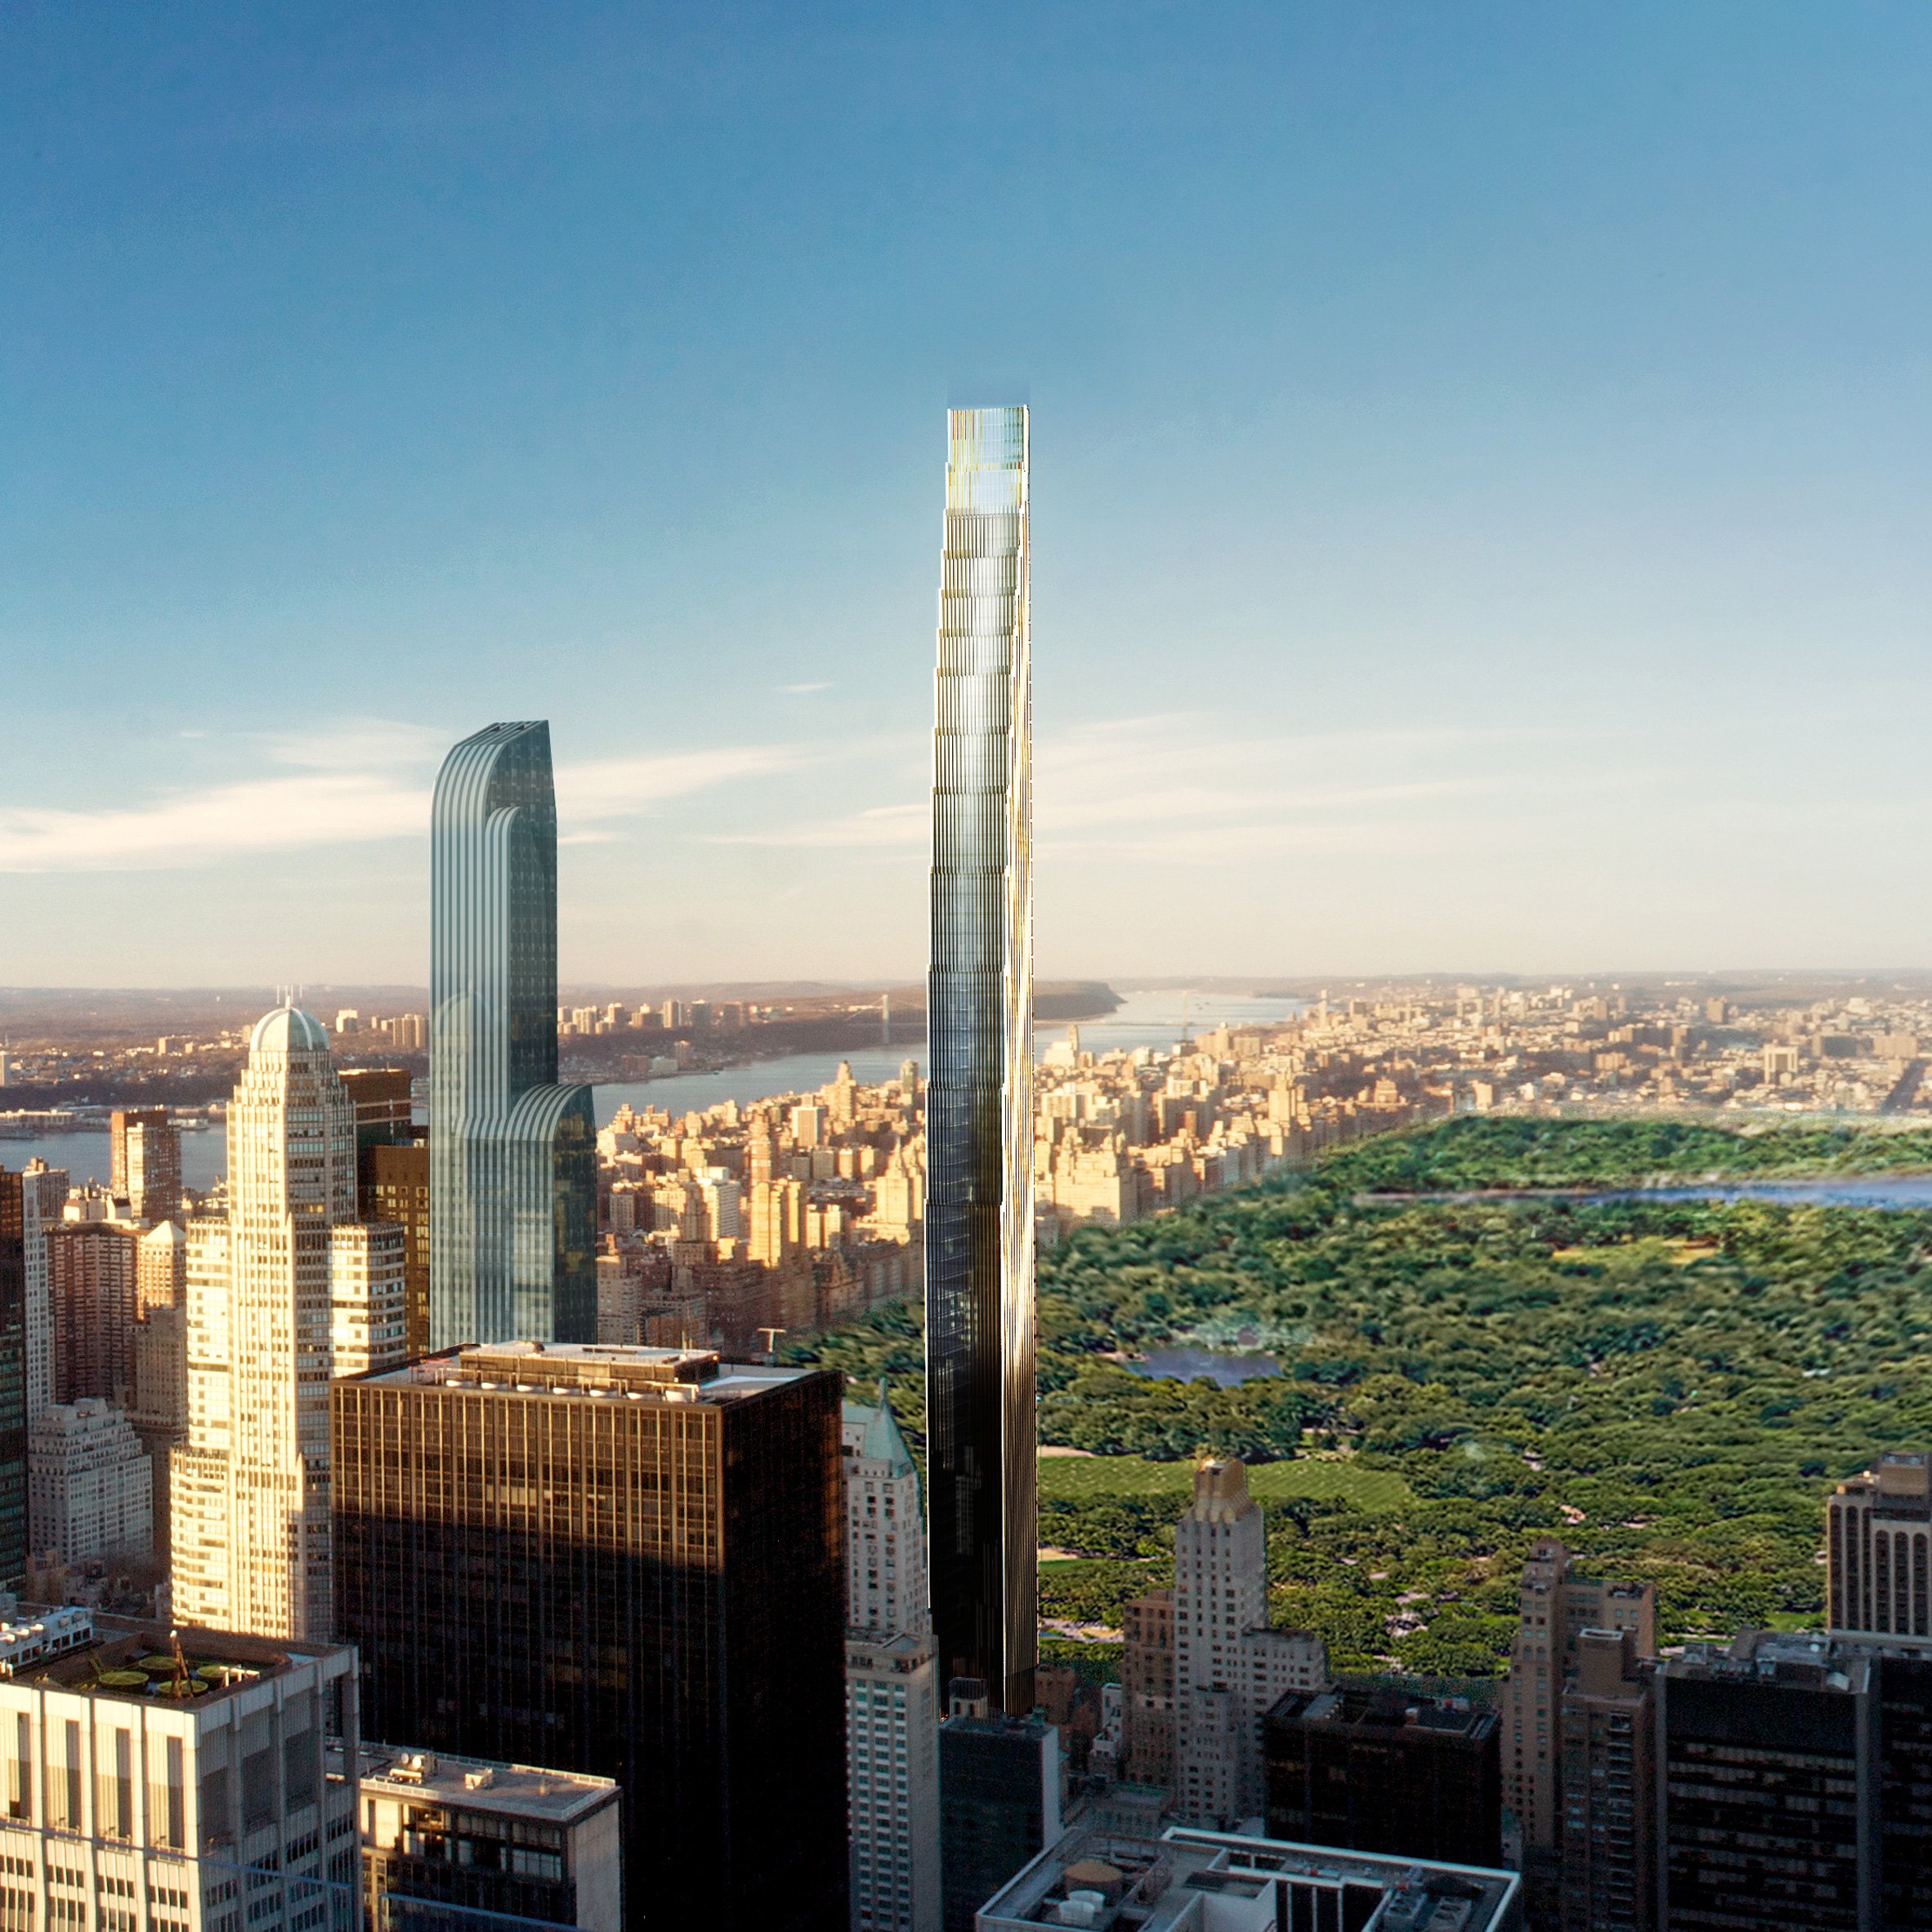 NYC's latest skyscraper: The 1428 feet tall, 60 feet wide, skinny skyscraper